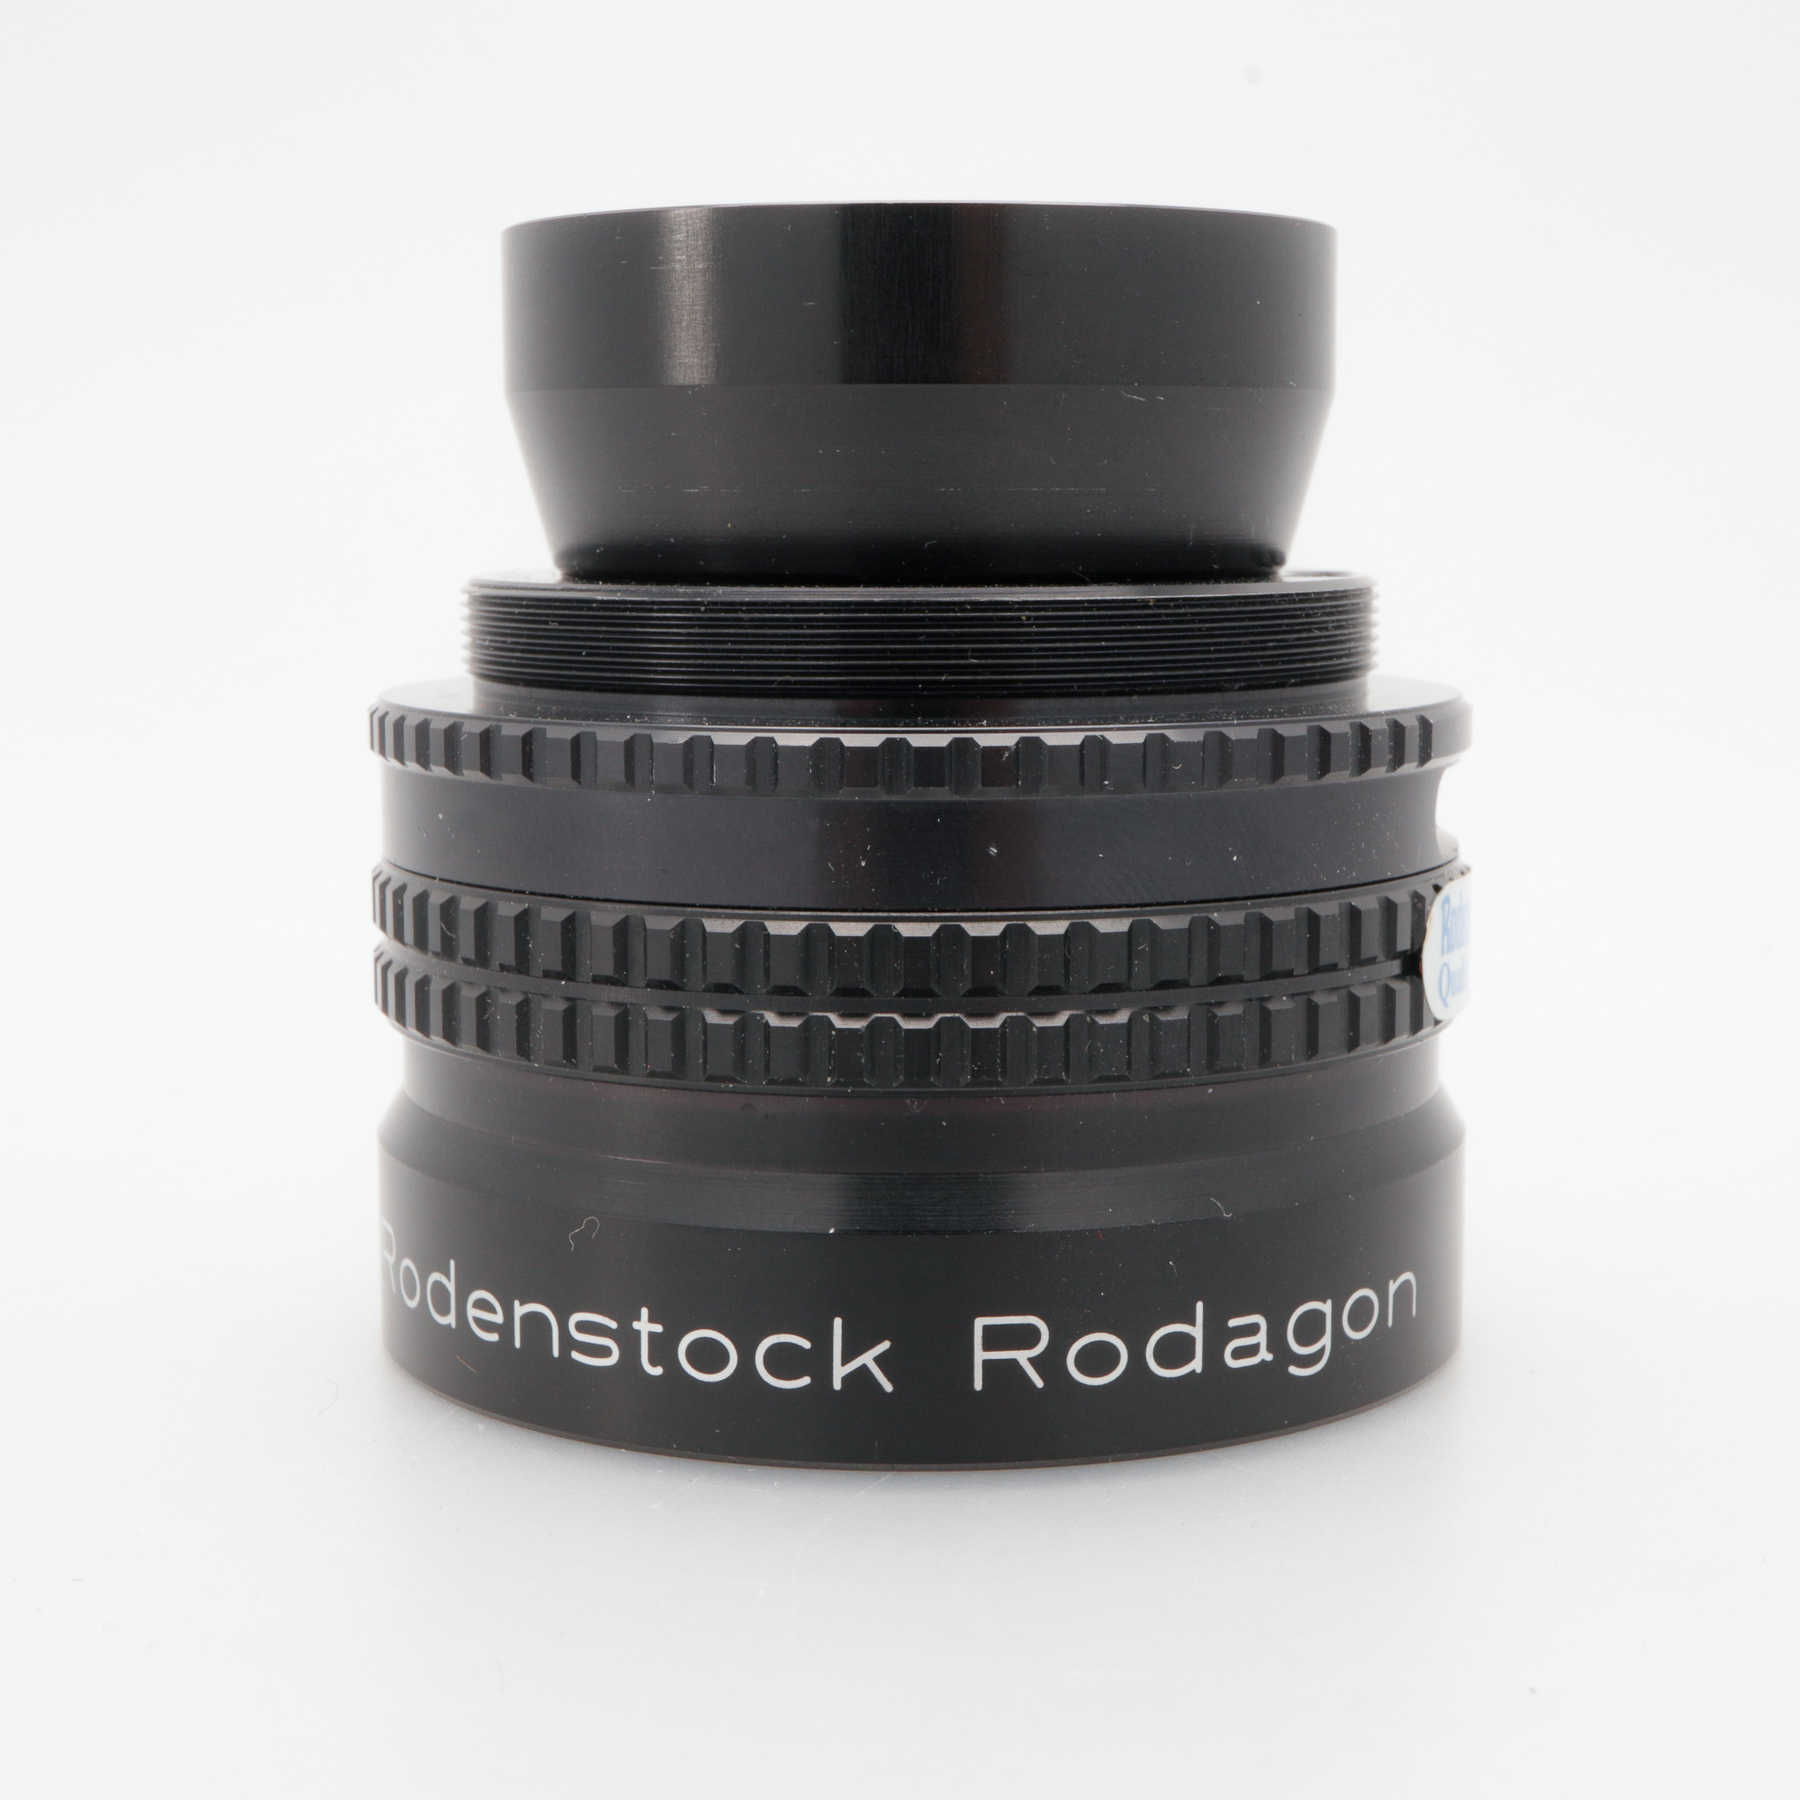 Rodenstock Rodagon 180mm f/5.6